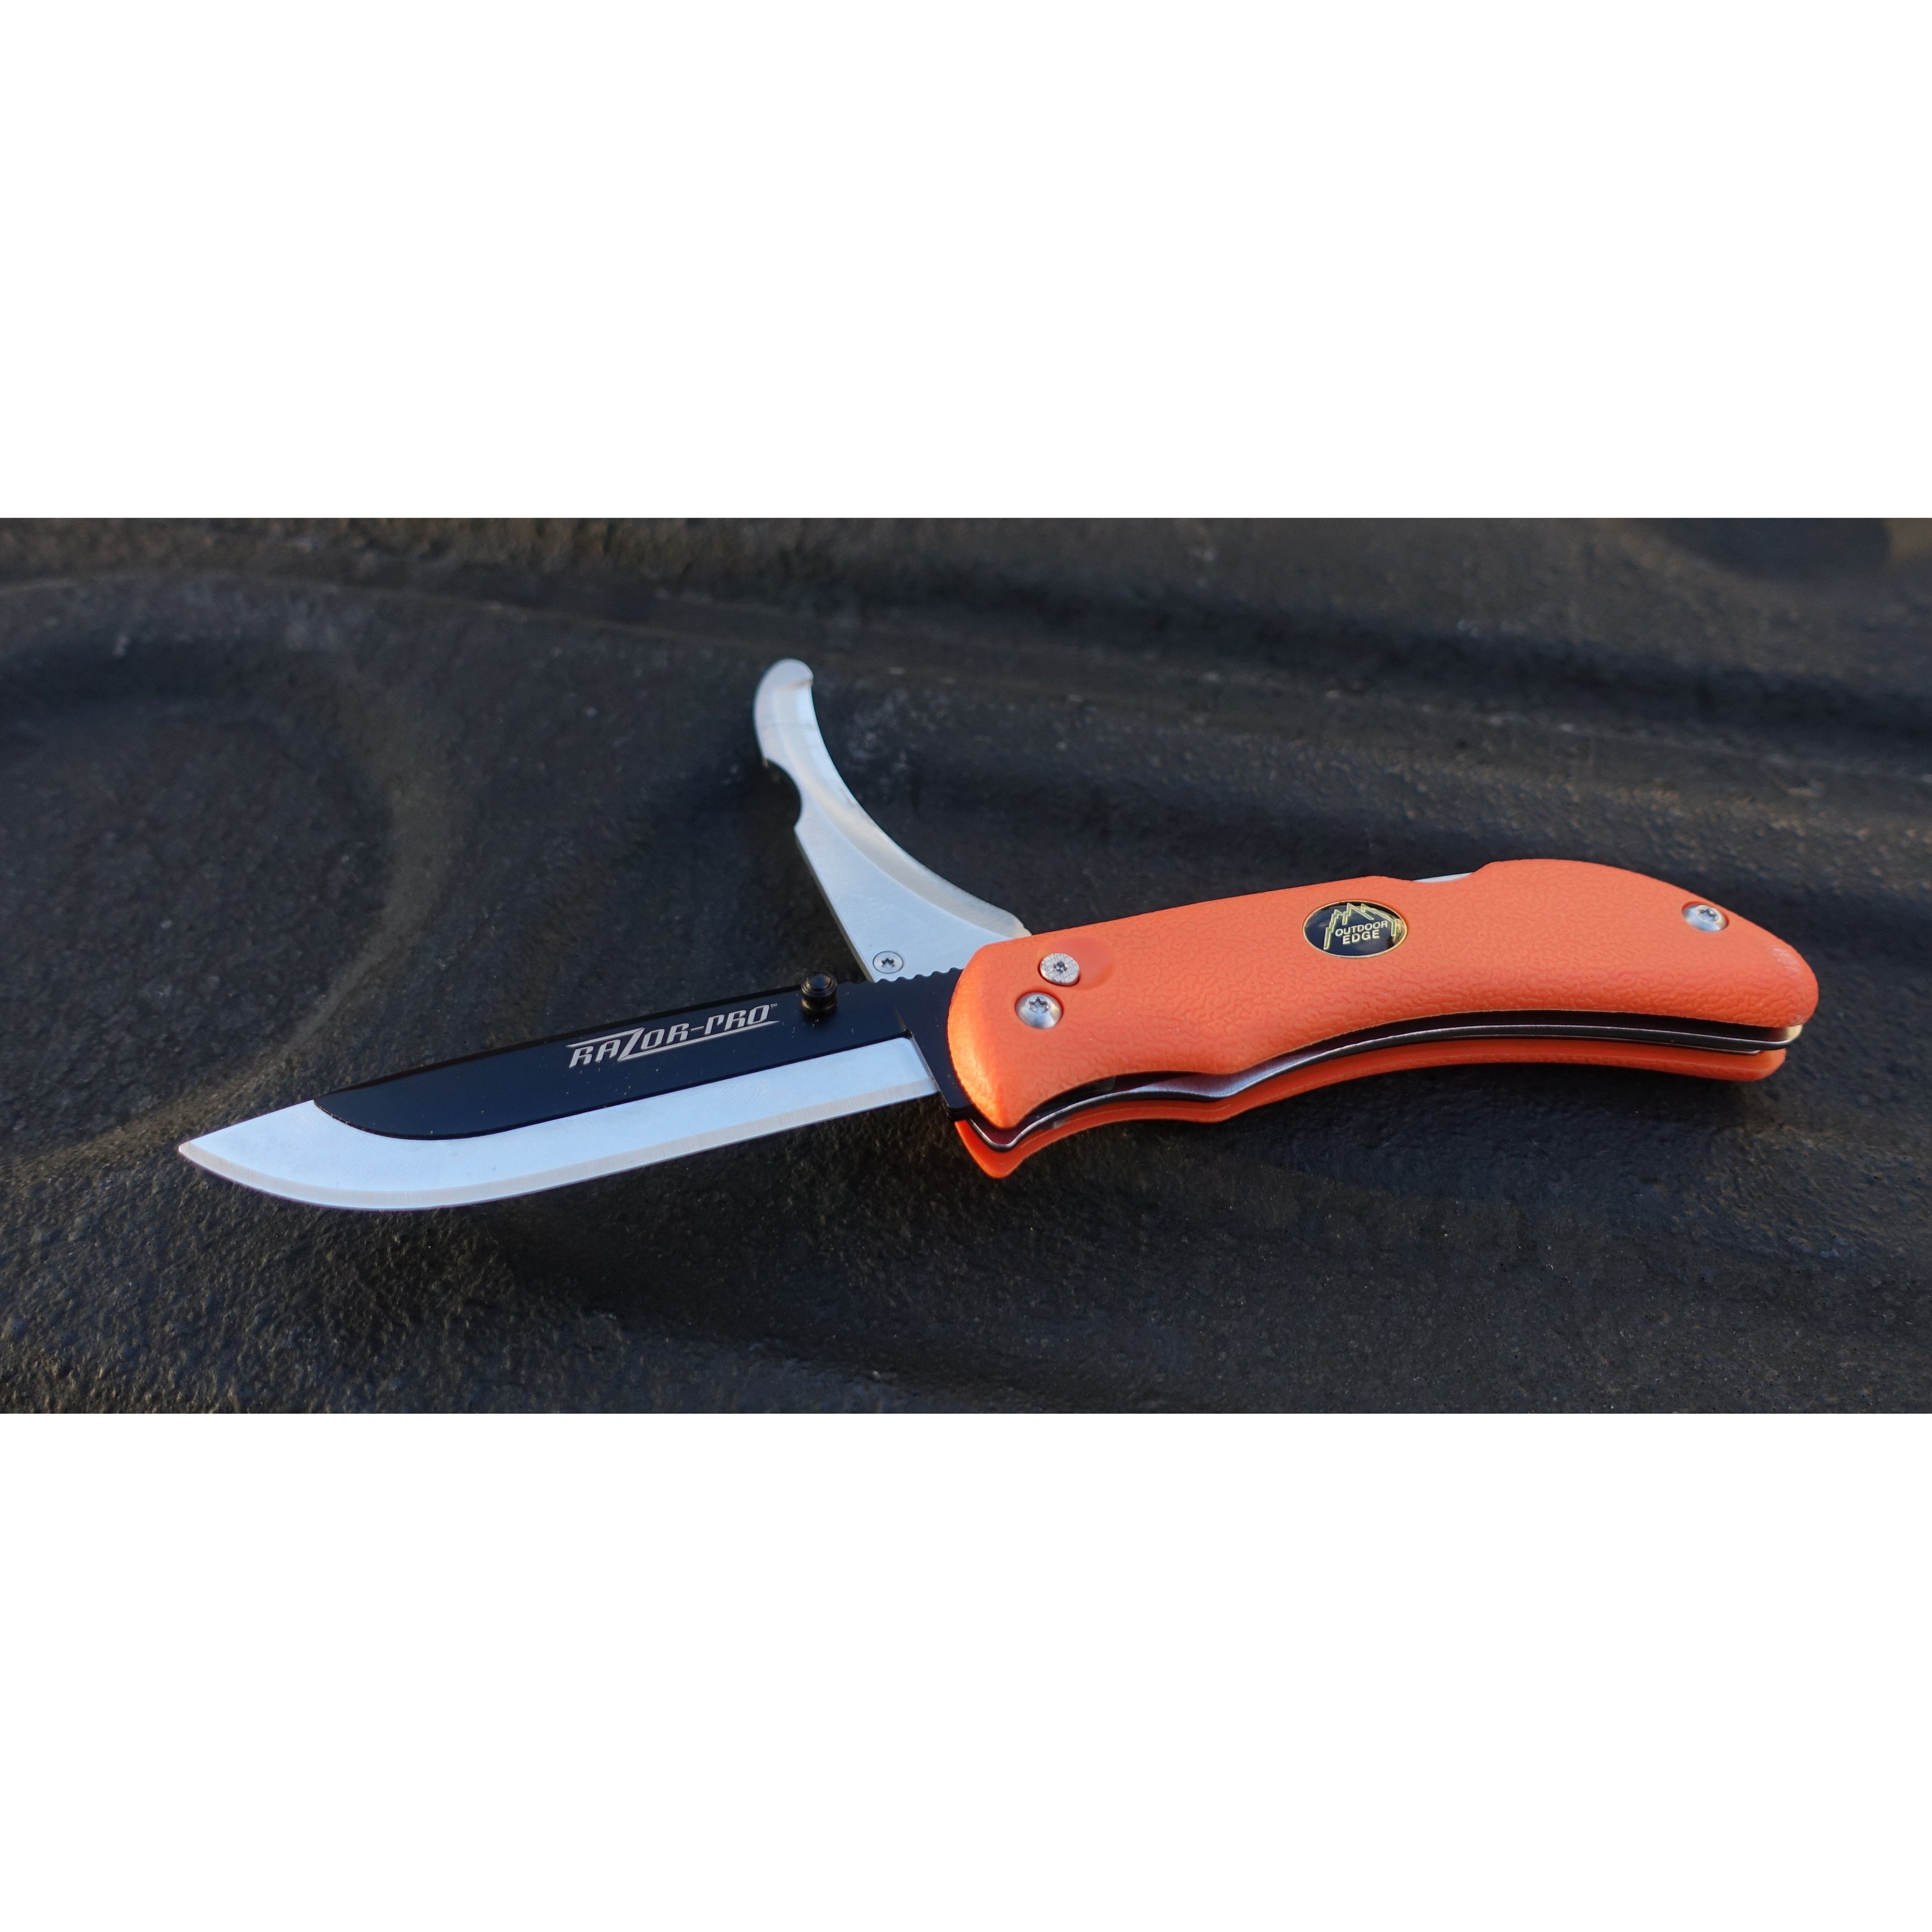 Outdoor Edge Razor-Pro Folding Knife w/ RePlacement Blades & Sheath